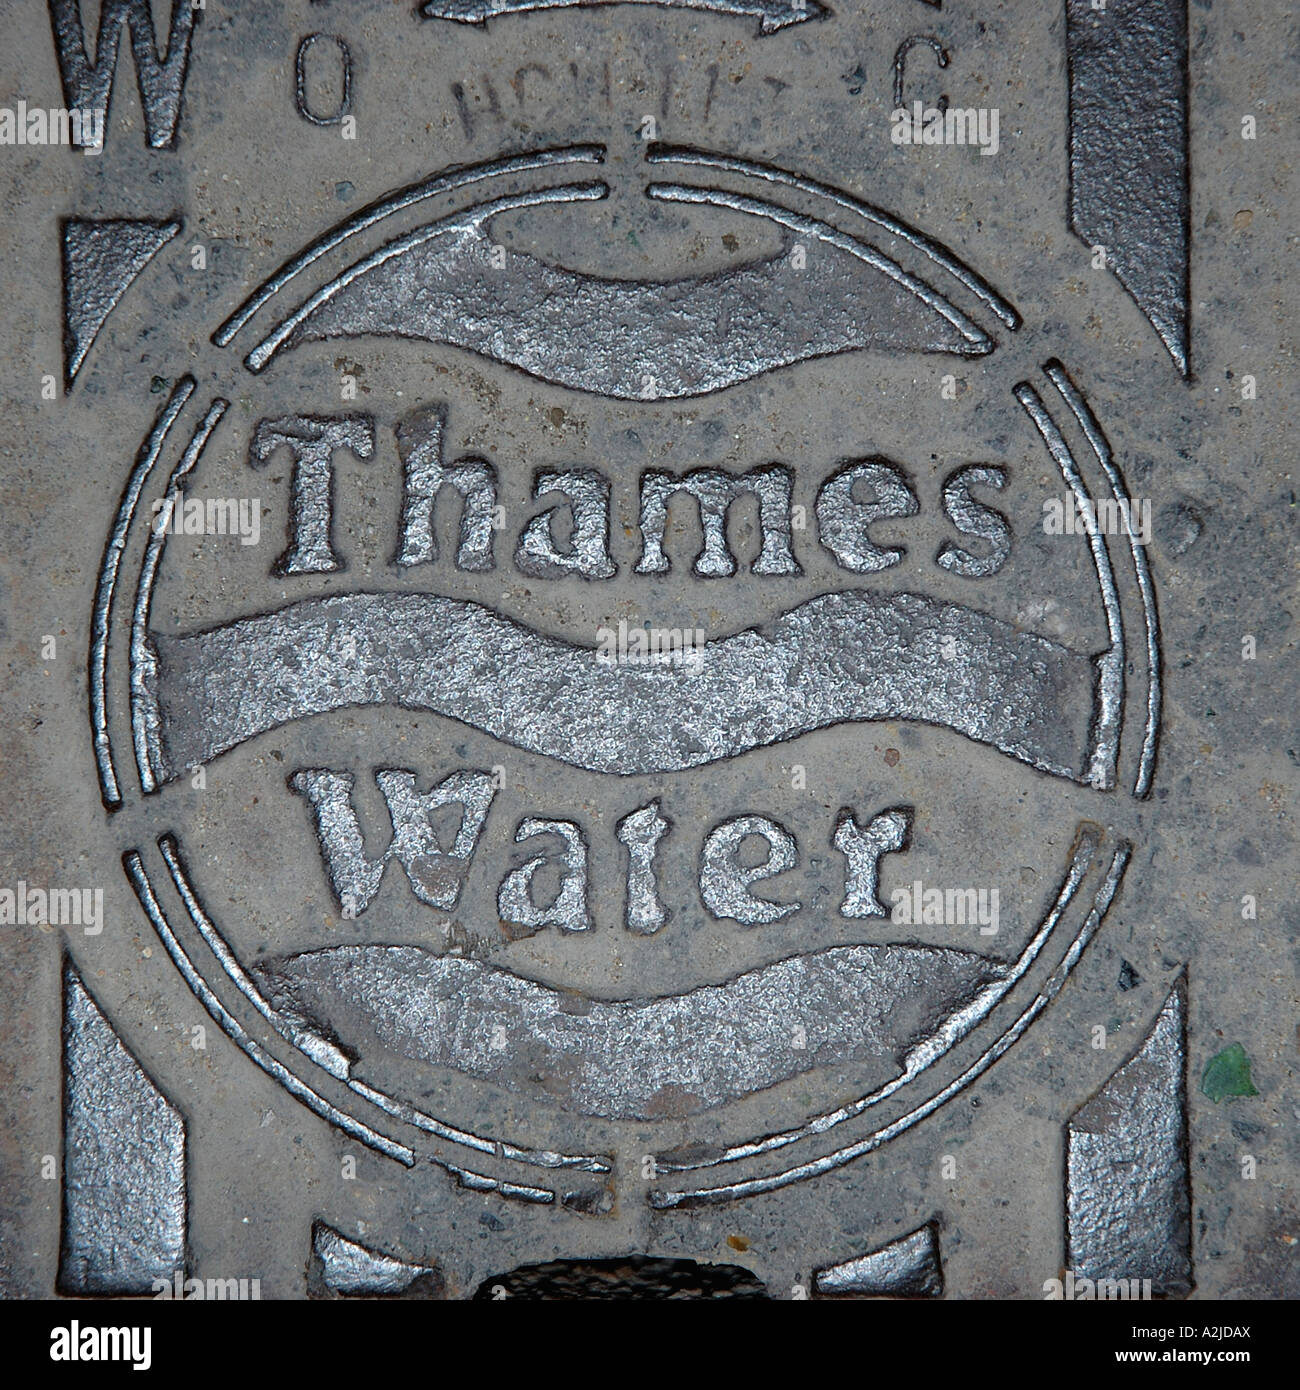 thames-water-drain-stock-photo-alamy